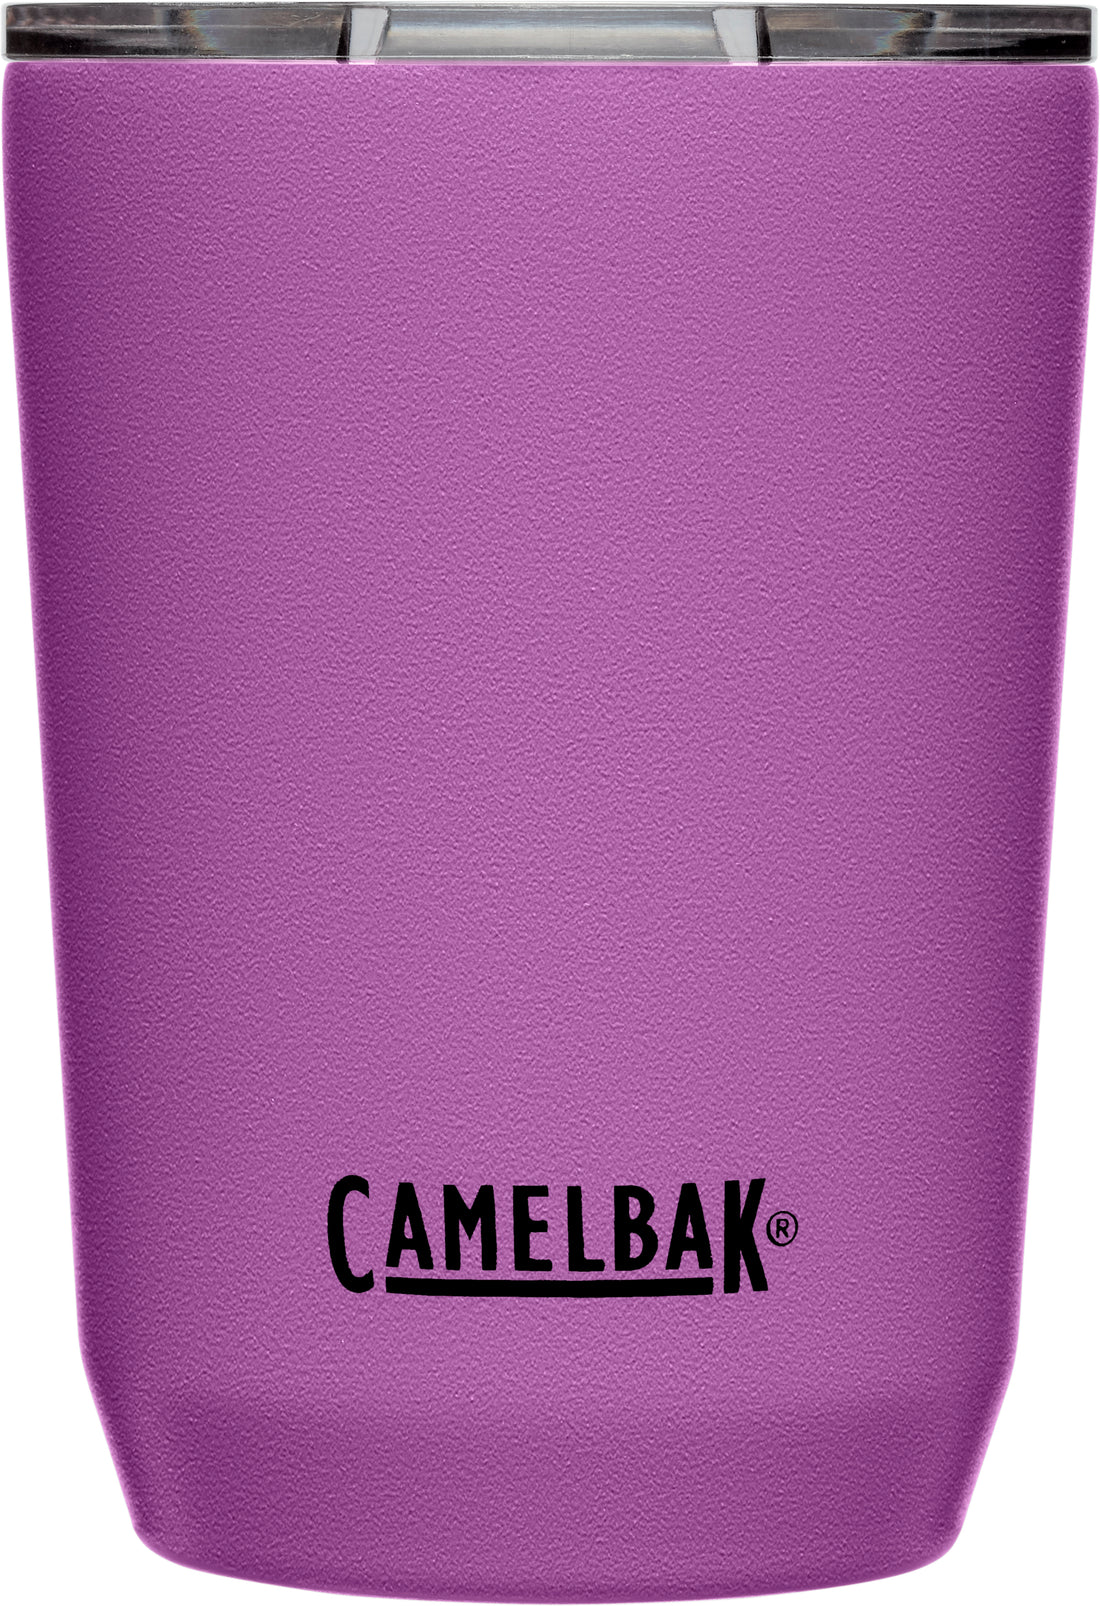 Camelbak|TUMBLER|Cycle_LM